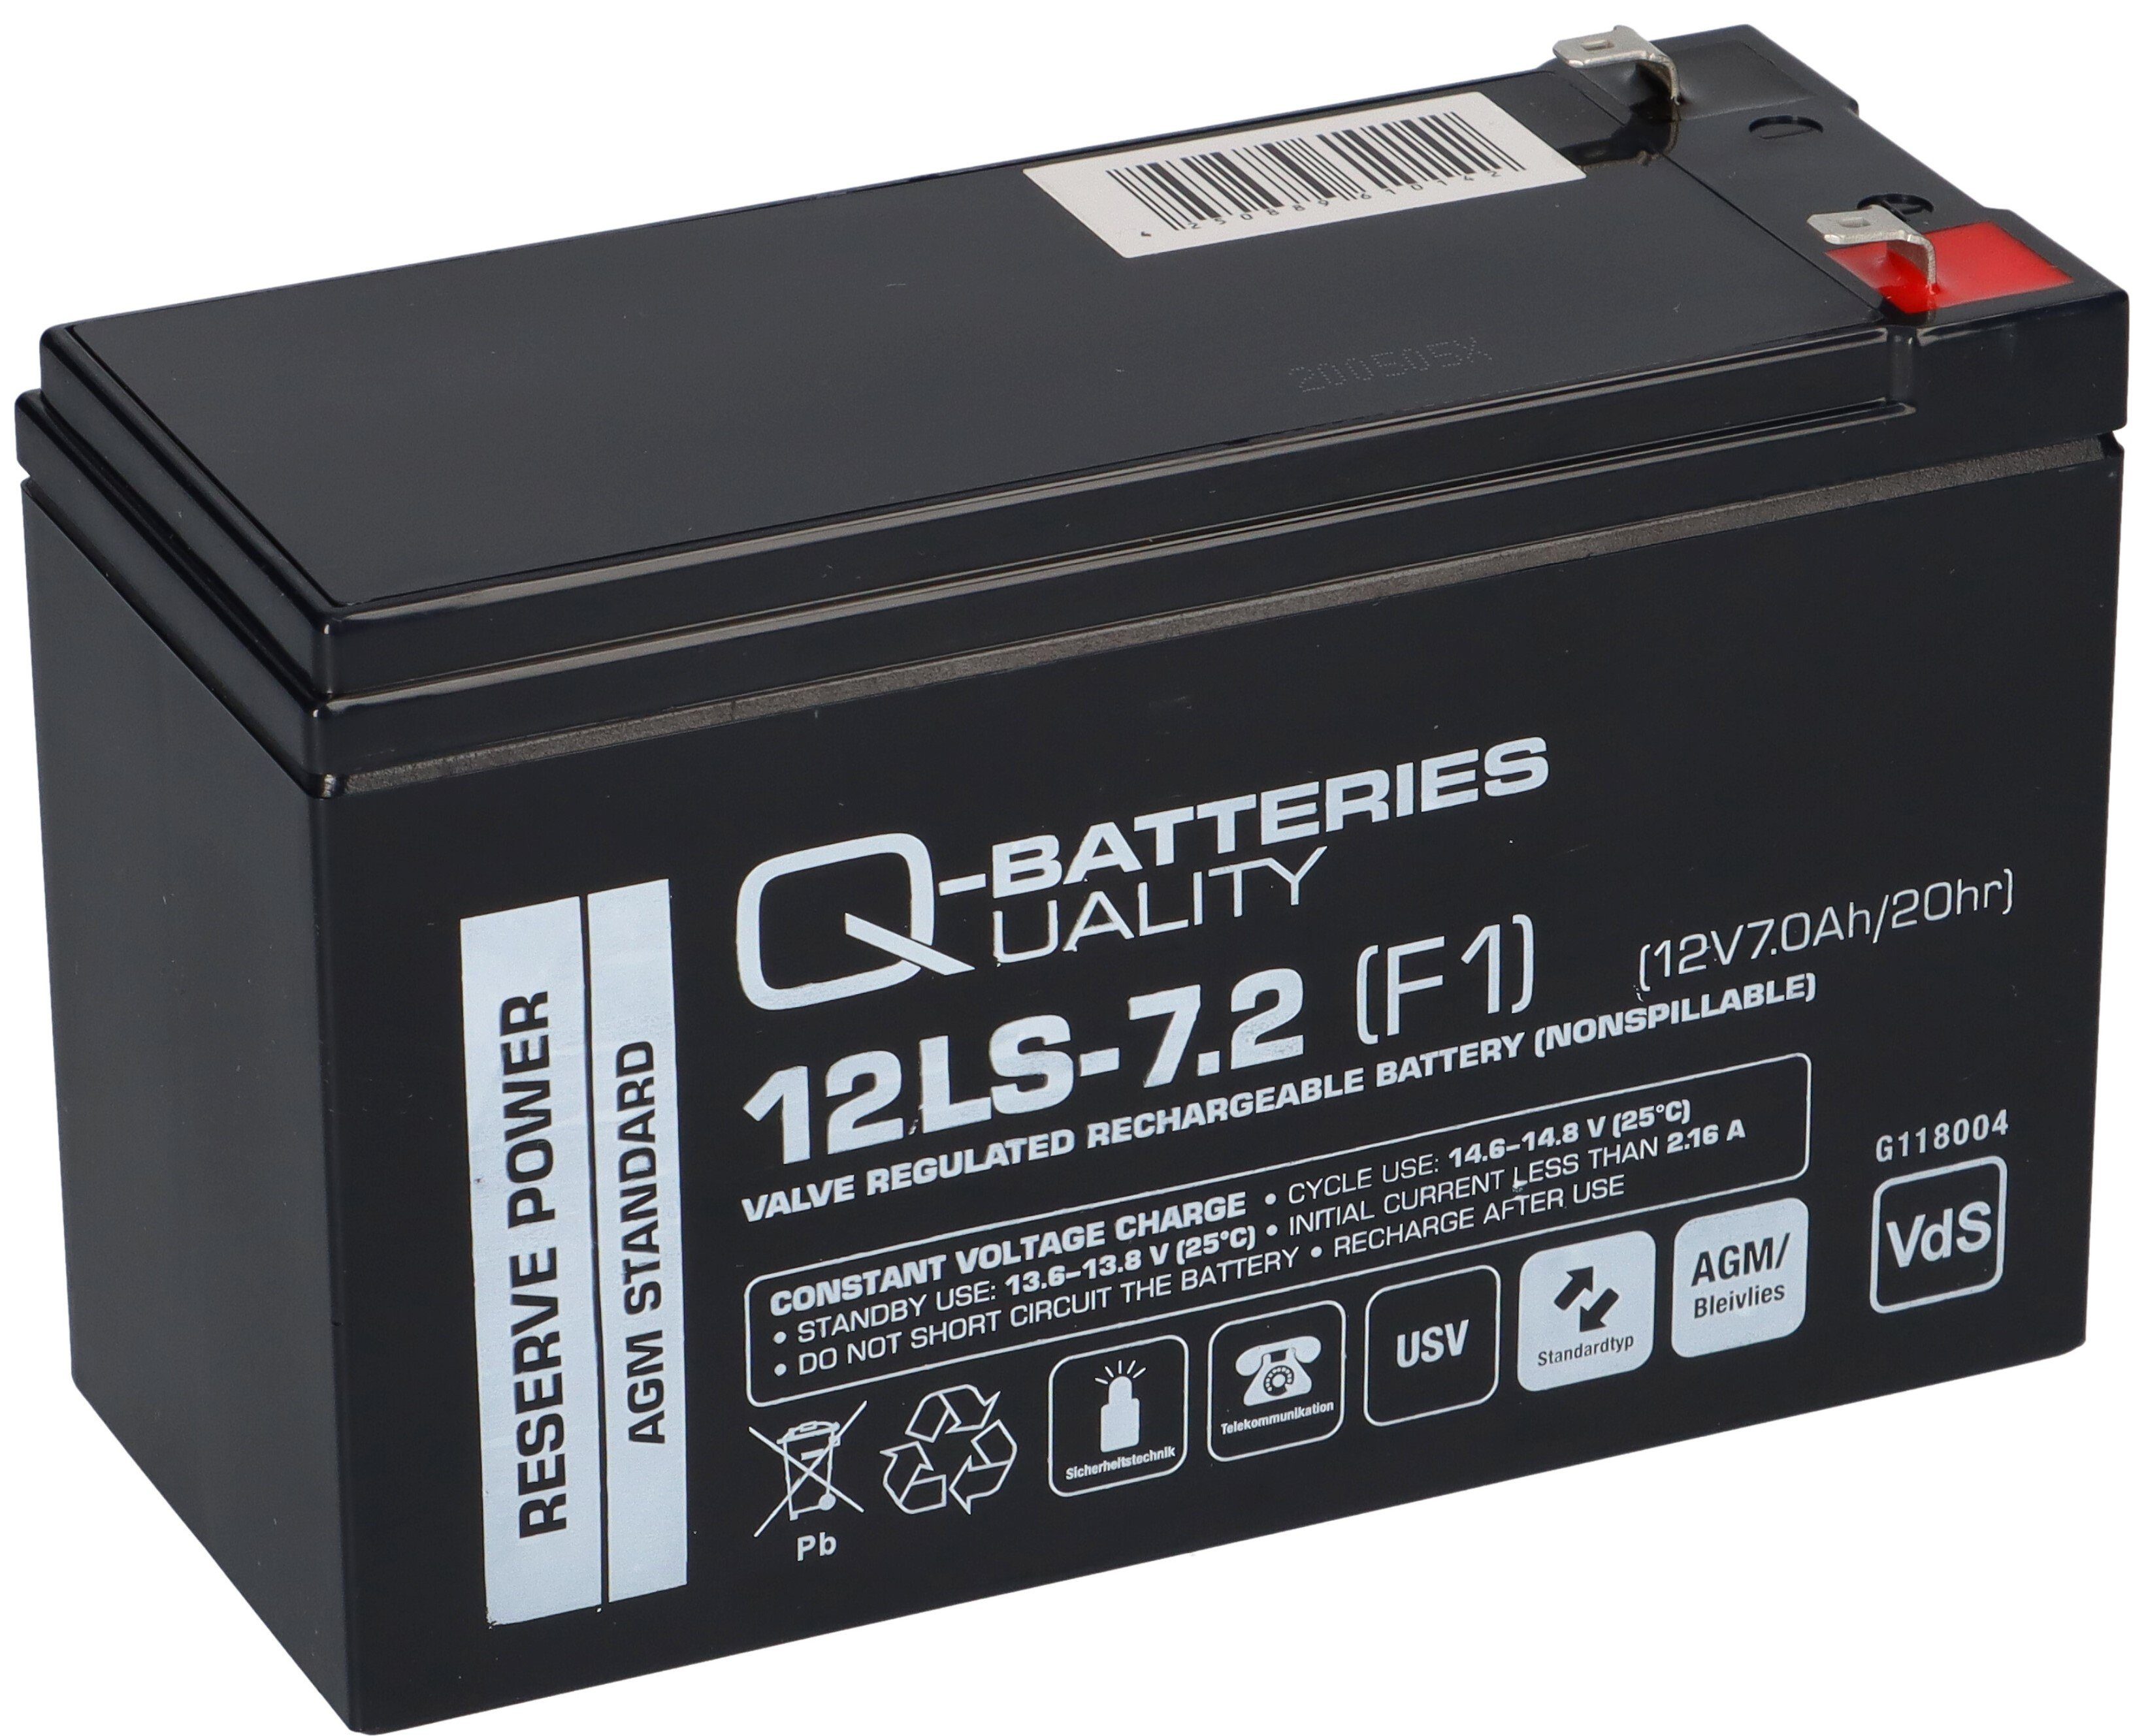 Q-Batteries Q-Batteries 12LS-7.2 F1 12V 7,2Ah Blei-Vlies-Akku / AGM VRLA mit VdS Bleiakkus | Bleiakkus